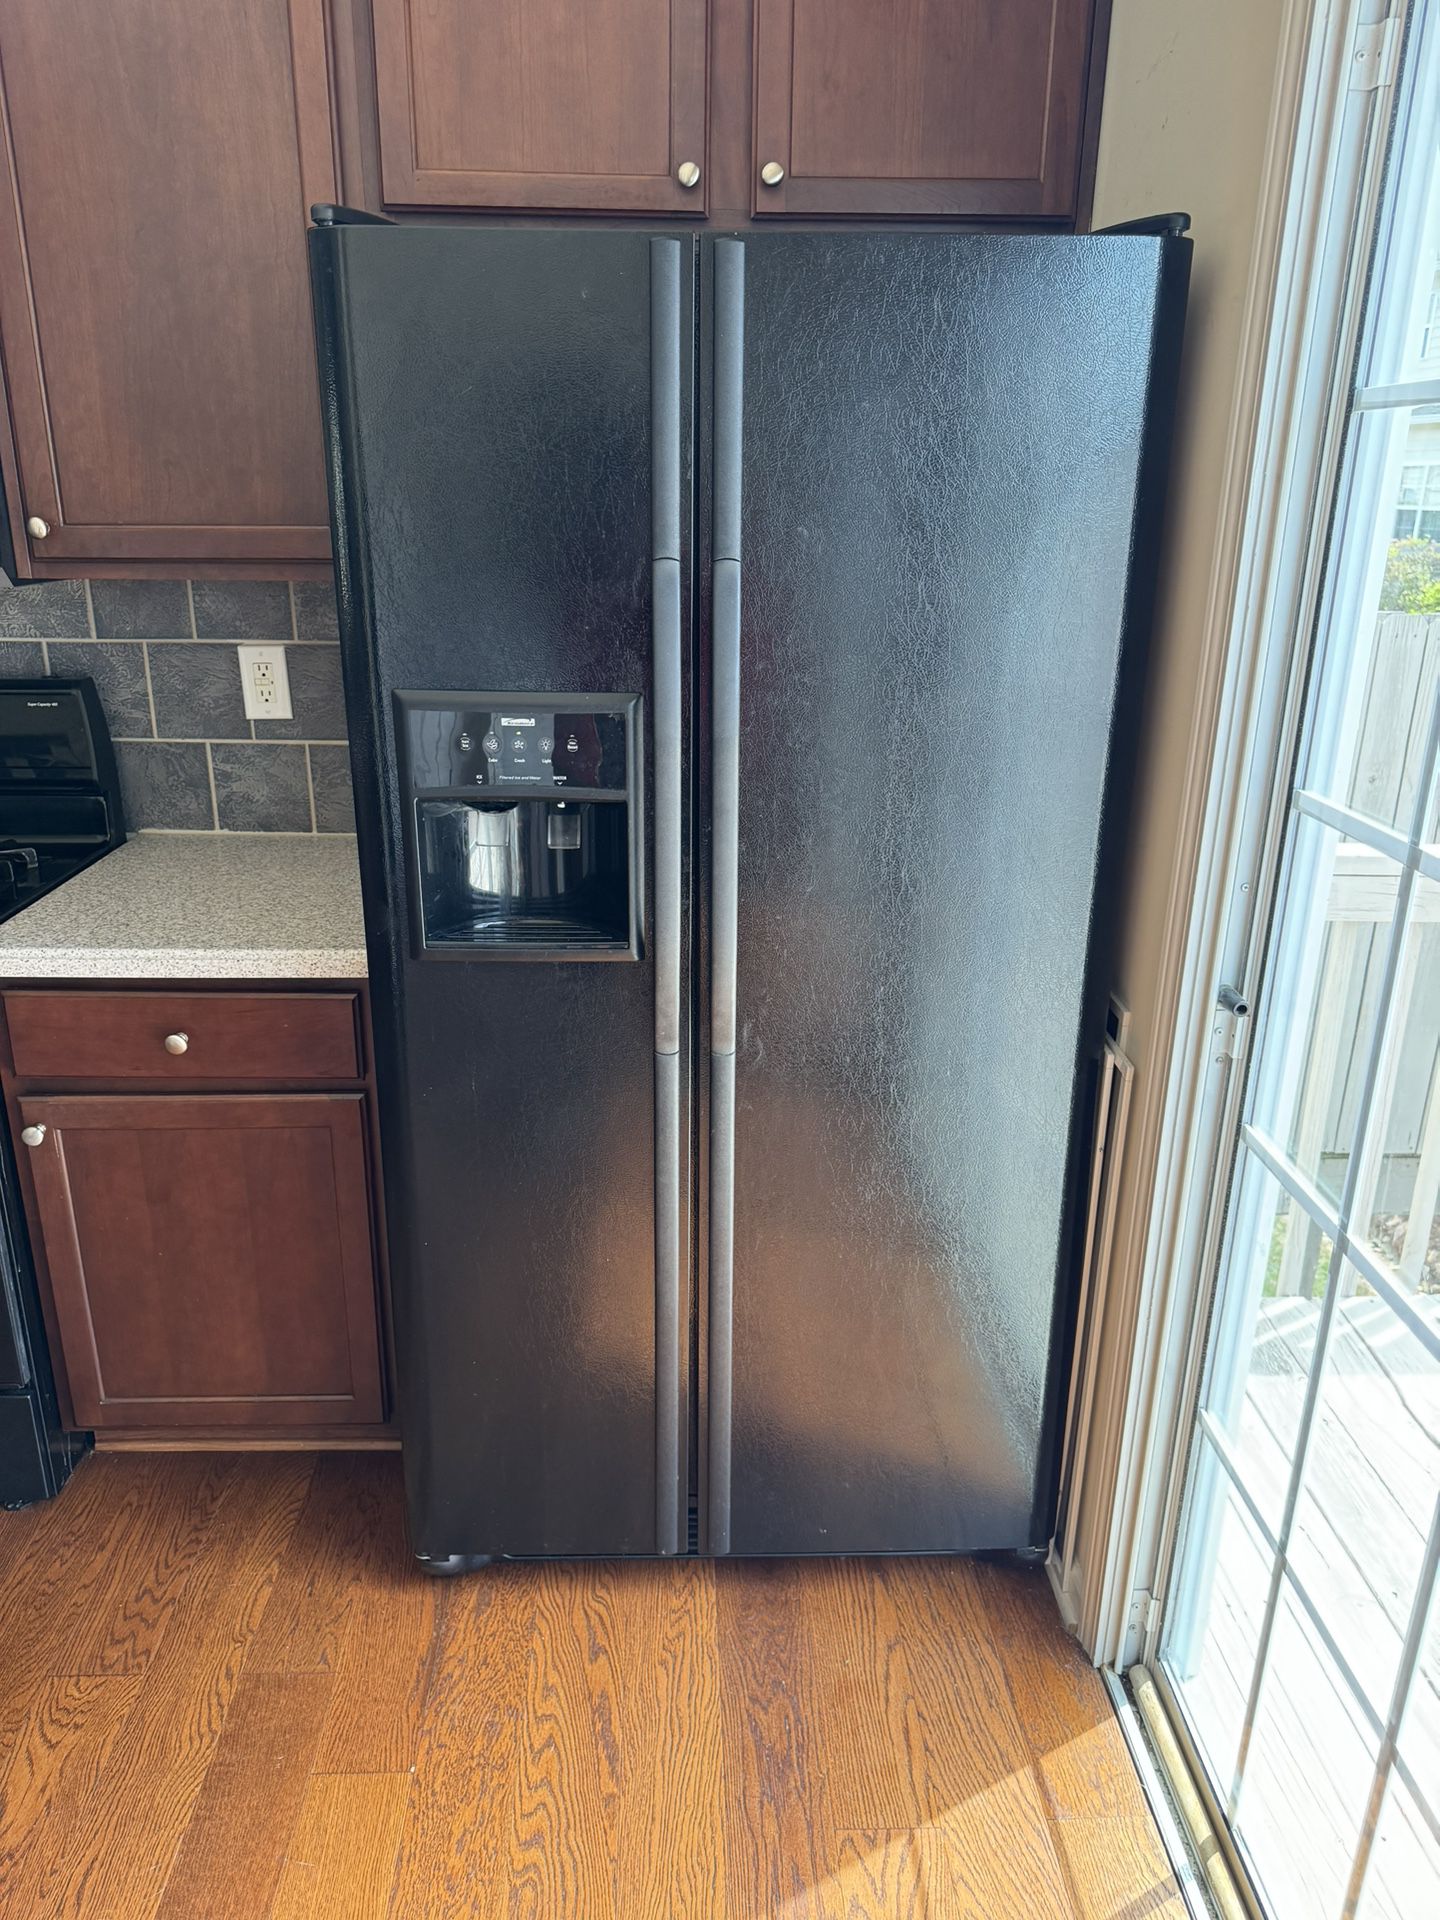 Whirlpool Refrigerator, Dishwasher, Stove Microwave set